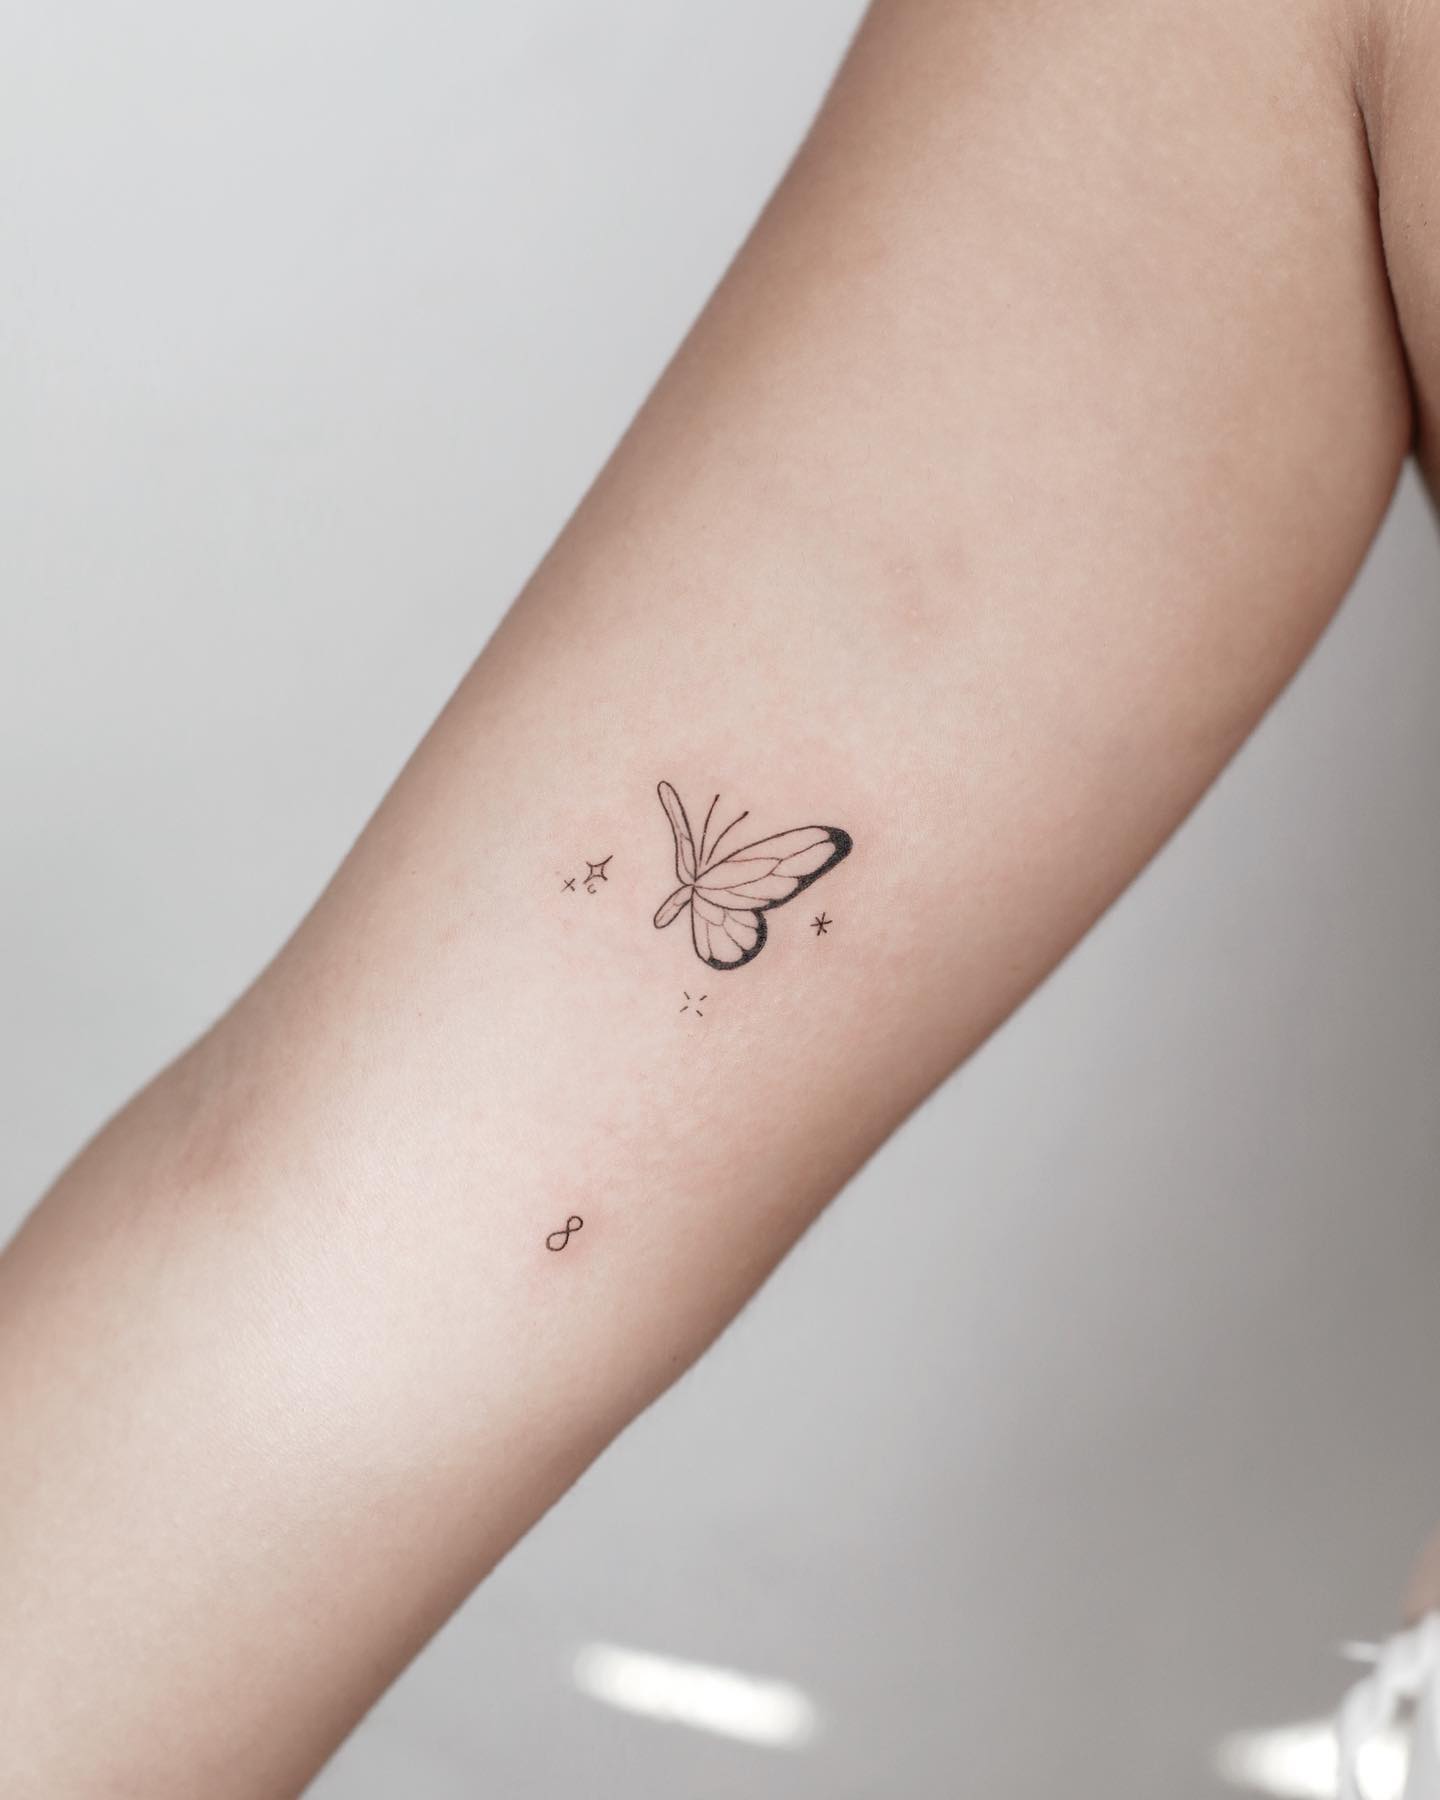 Tatuaje de mariposa minimalista